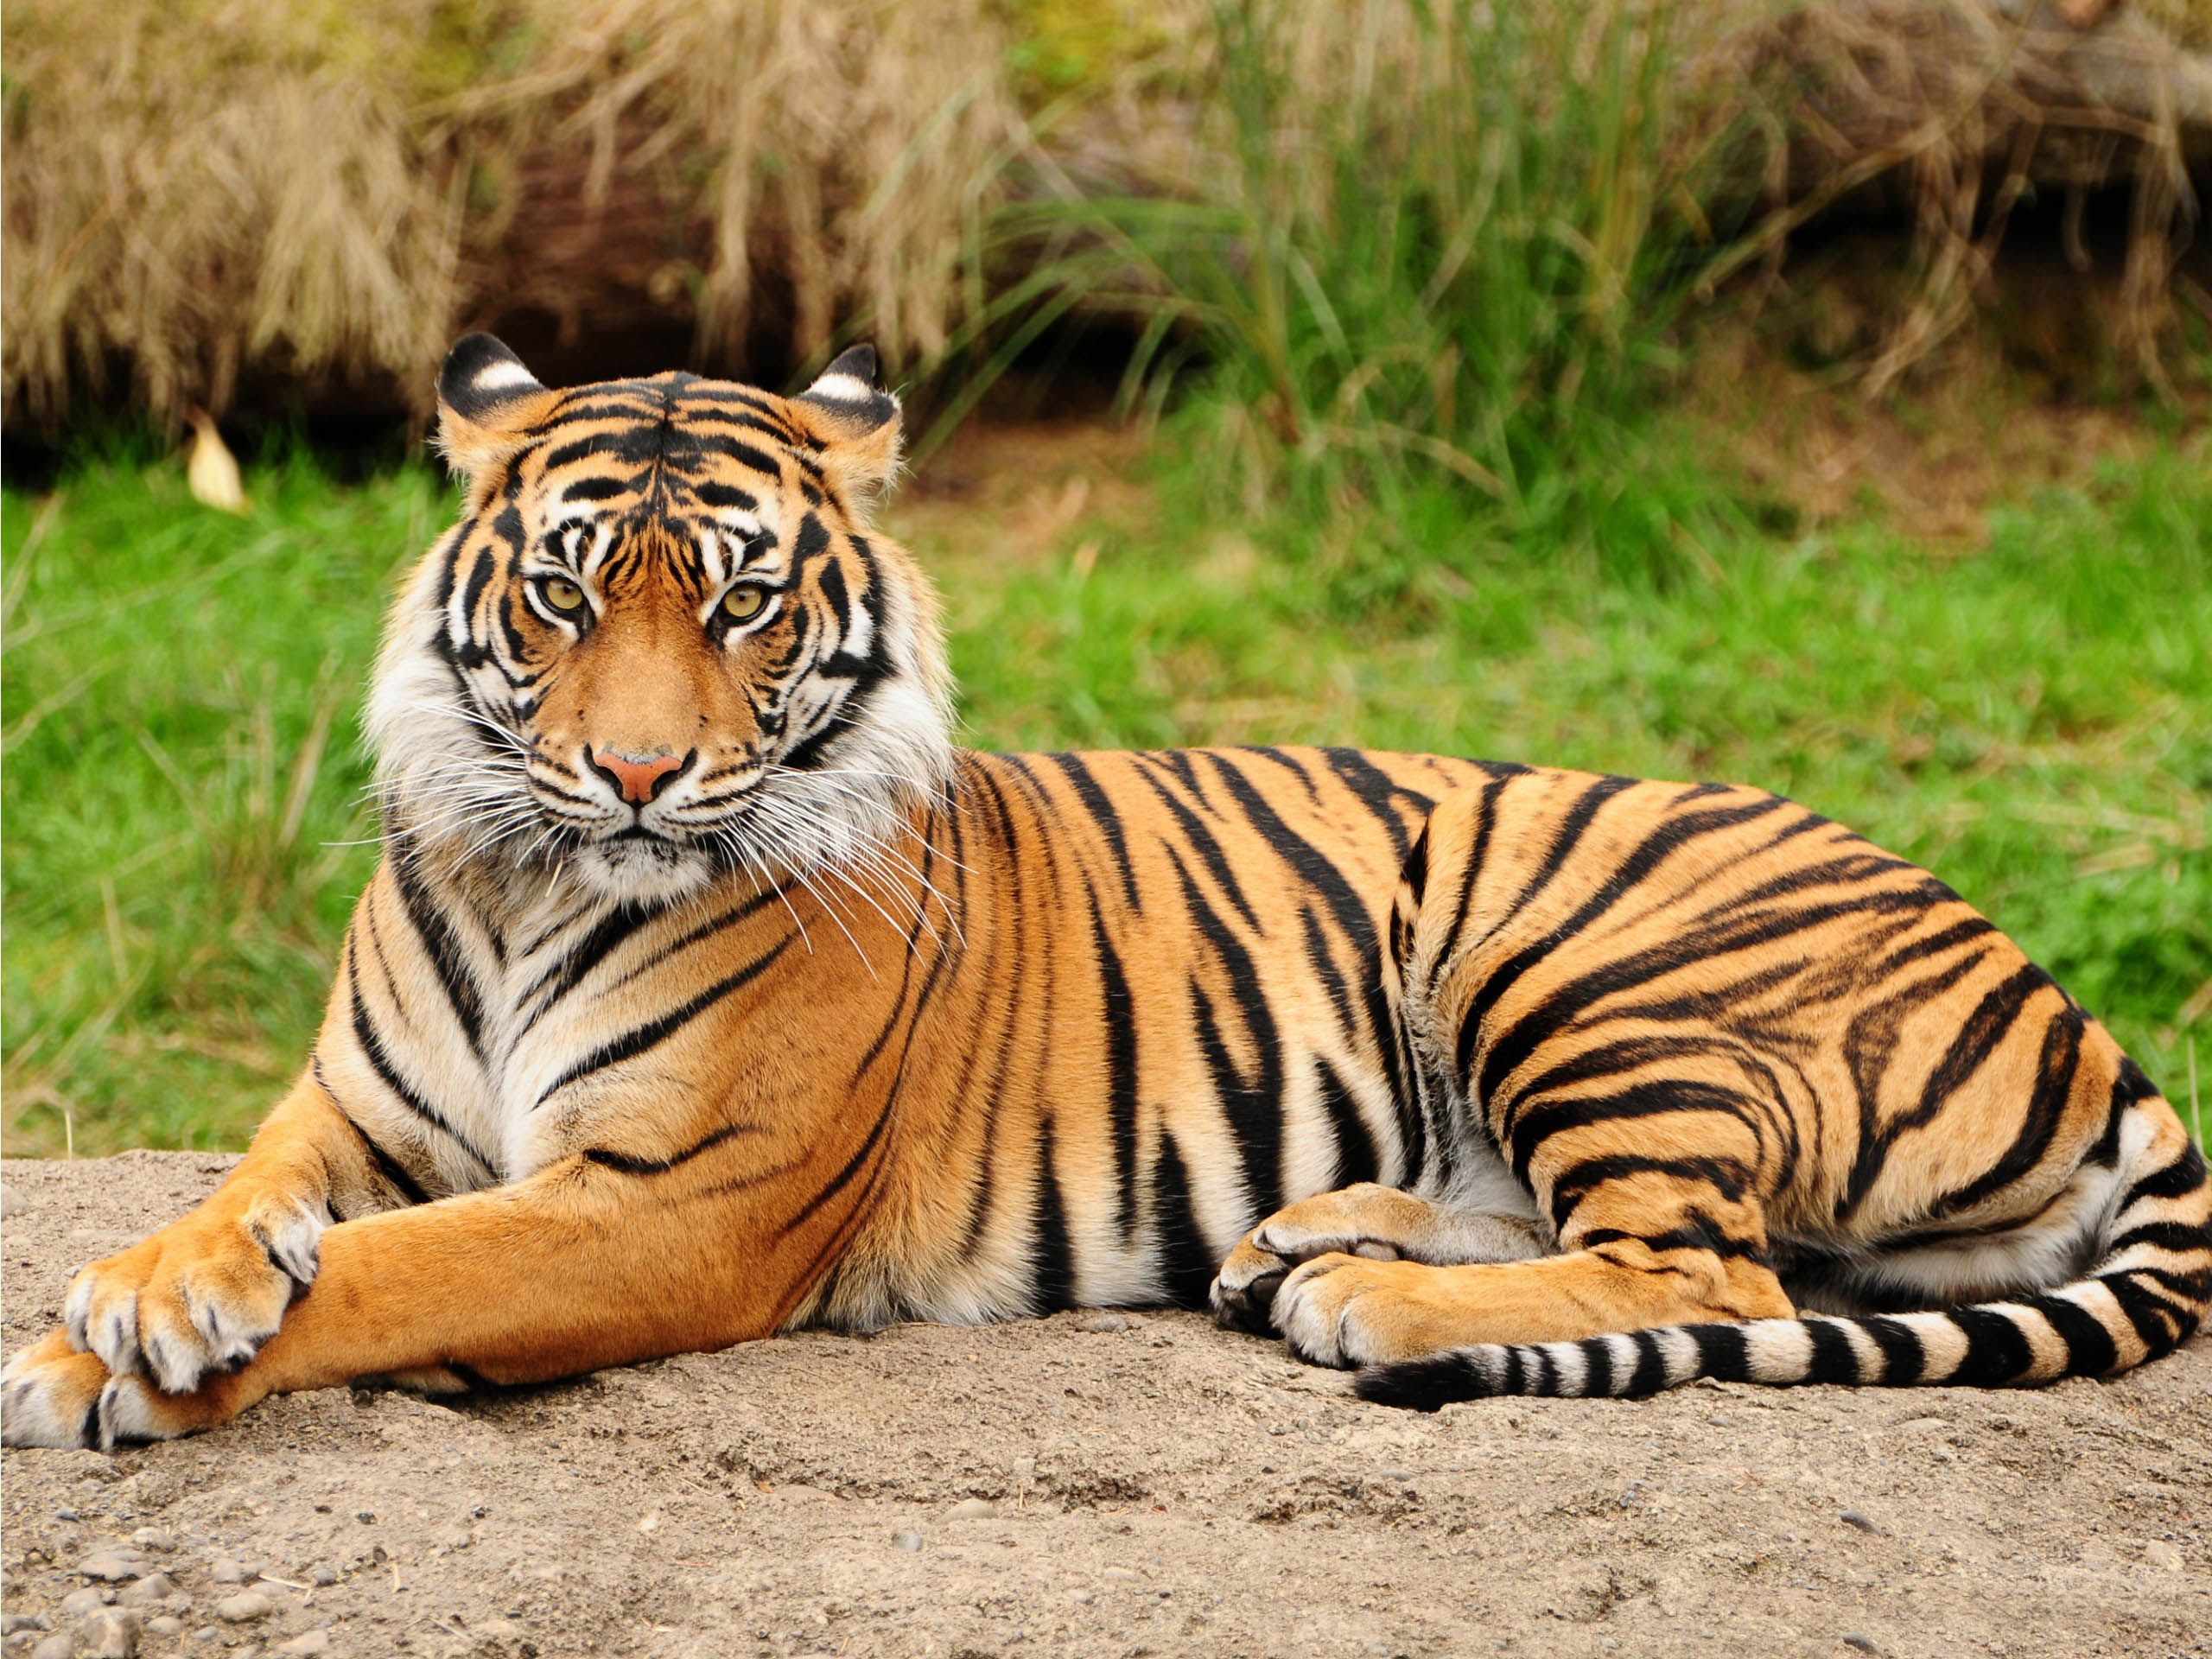 Tiger | Tigers, Animal and Tiger tiger